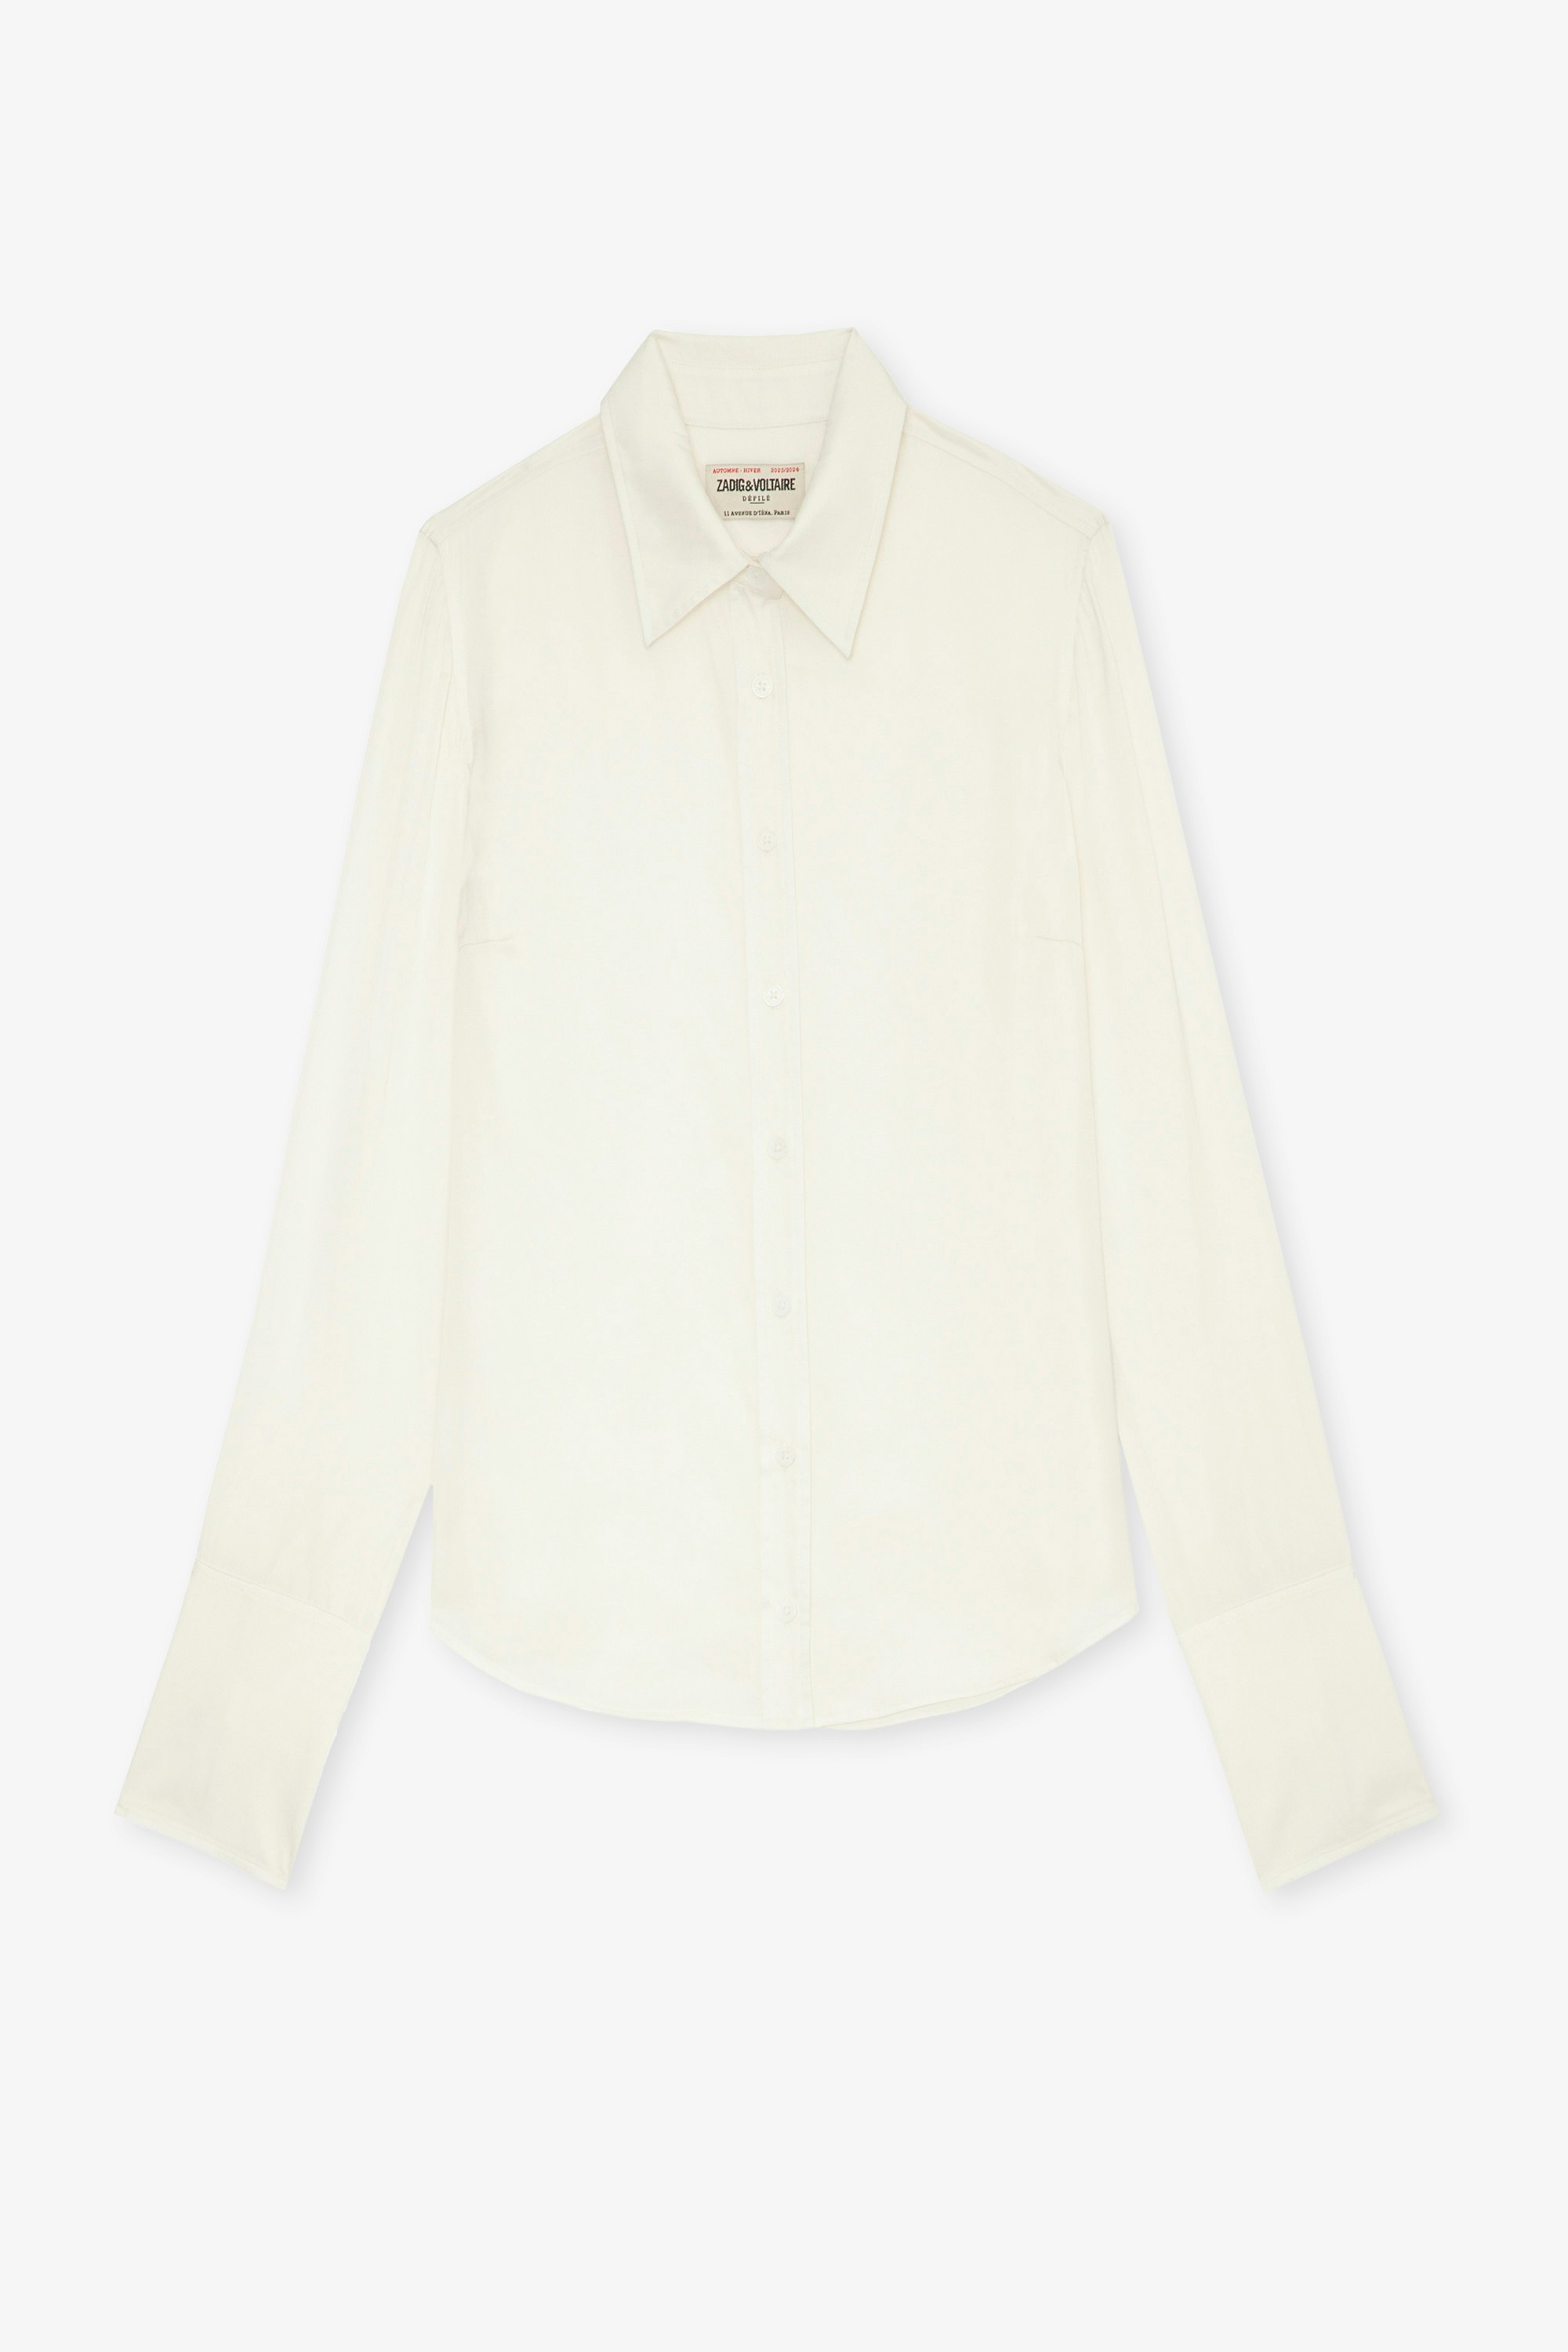 Tasko Satin Shirt - Women's white satin button-down shirt.